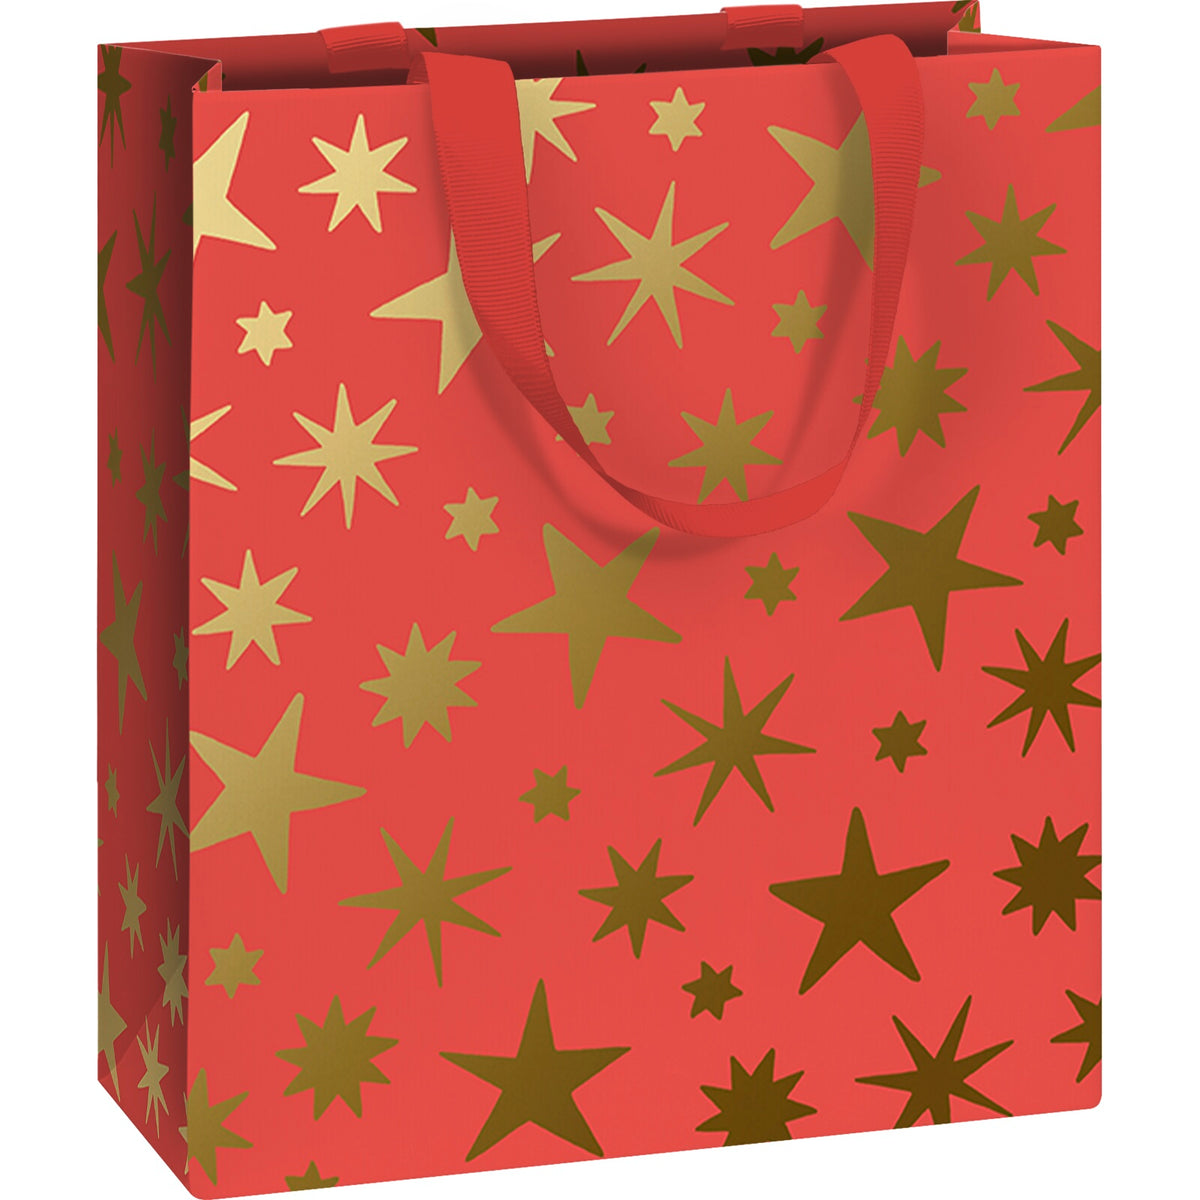 Aika Gold Stars Small Christmas Gift Bag by penny black